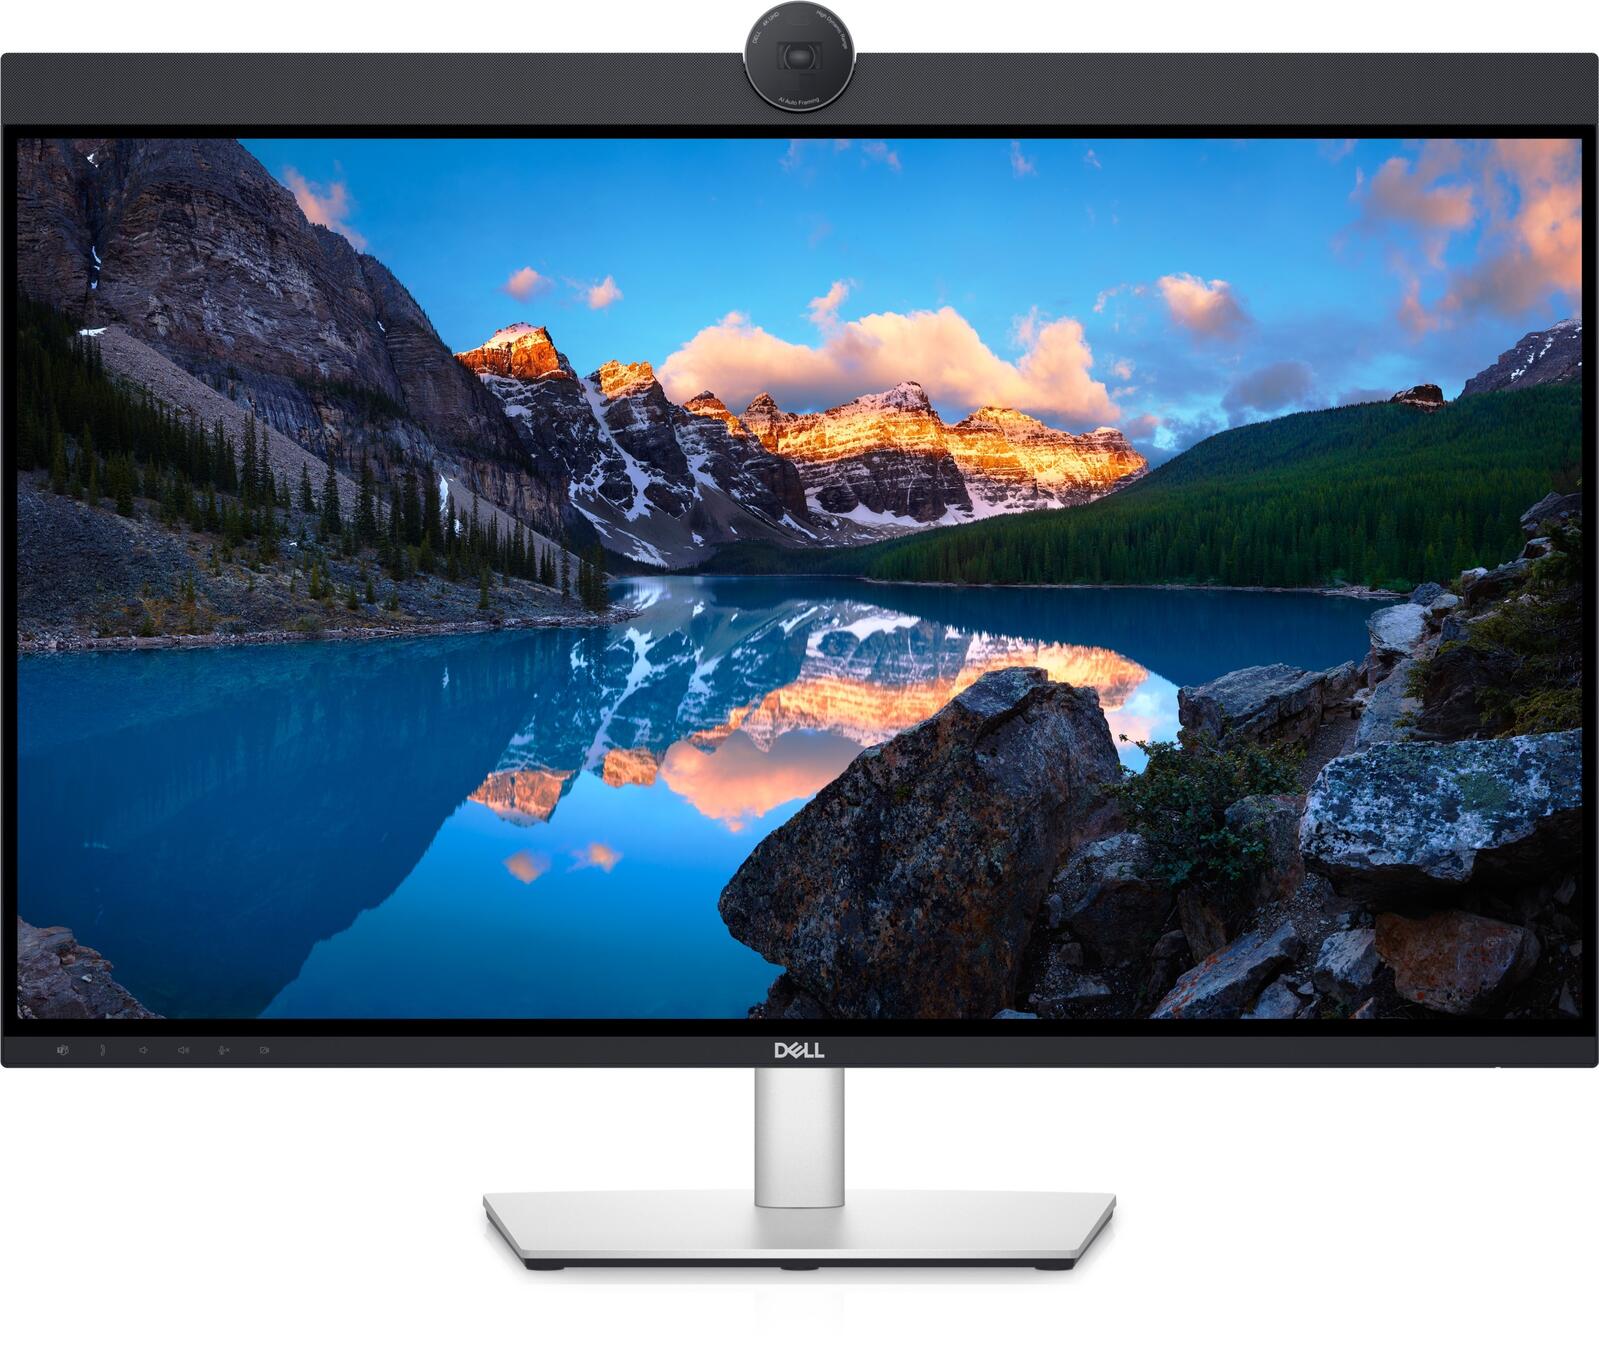 Dell UltraSharp U3223QZ monitors